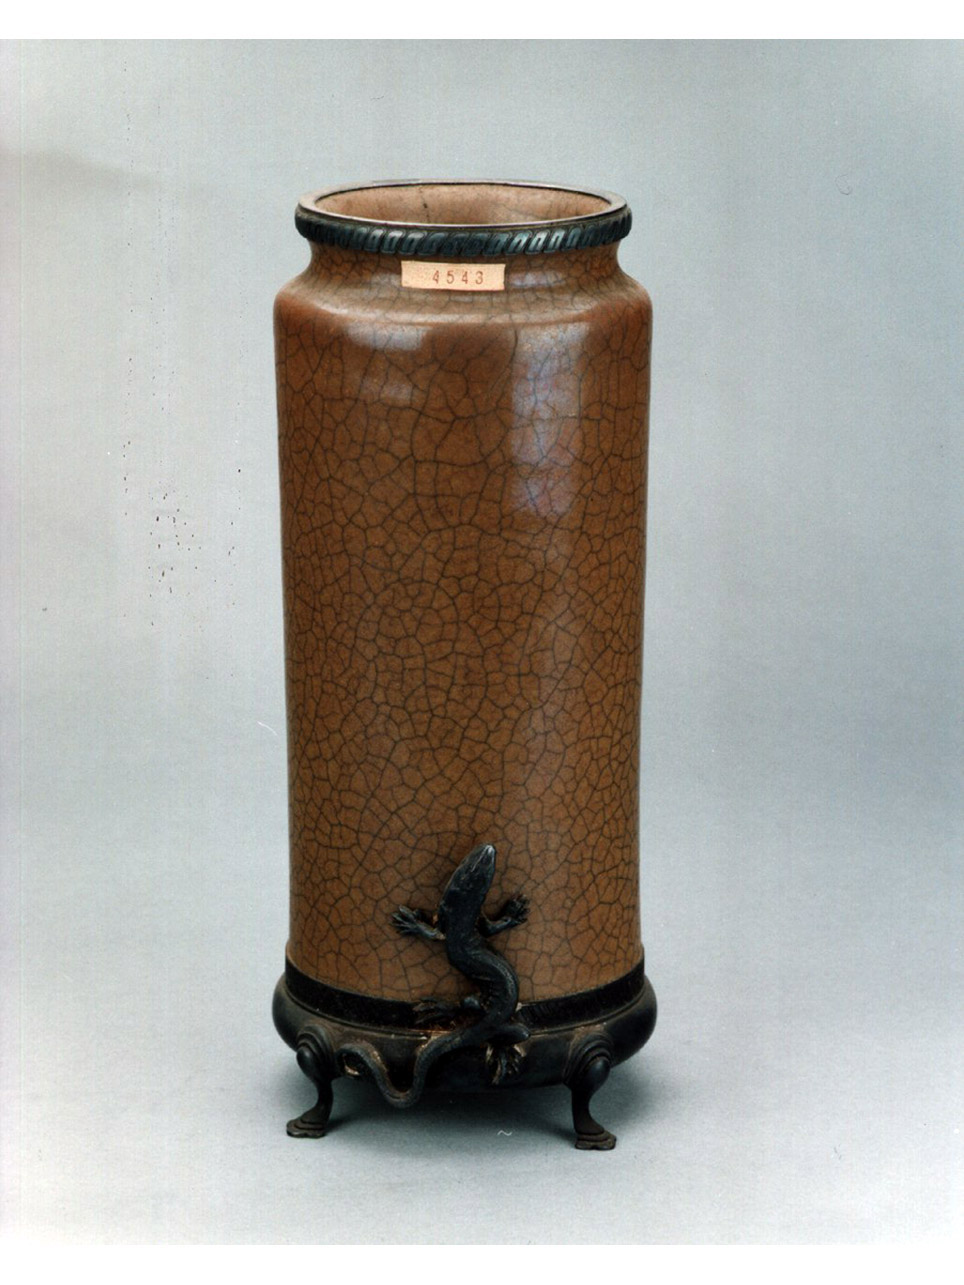 motivi decorativi vegetali e animali (vaso) - manifattura cinese (sec. XVIII)